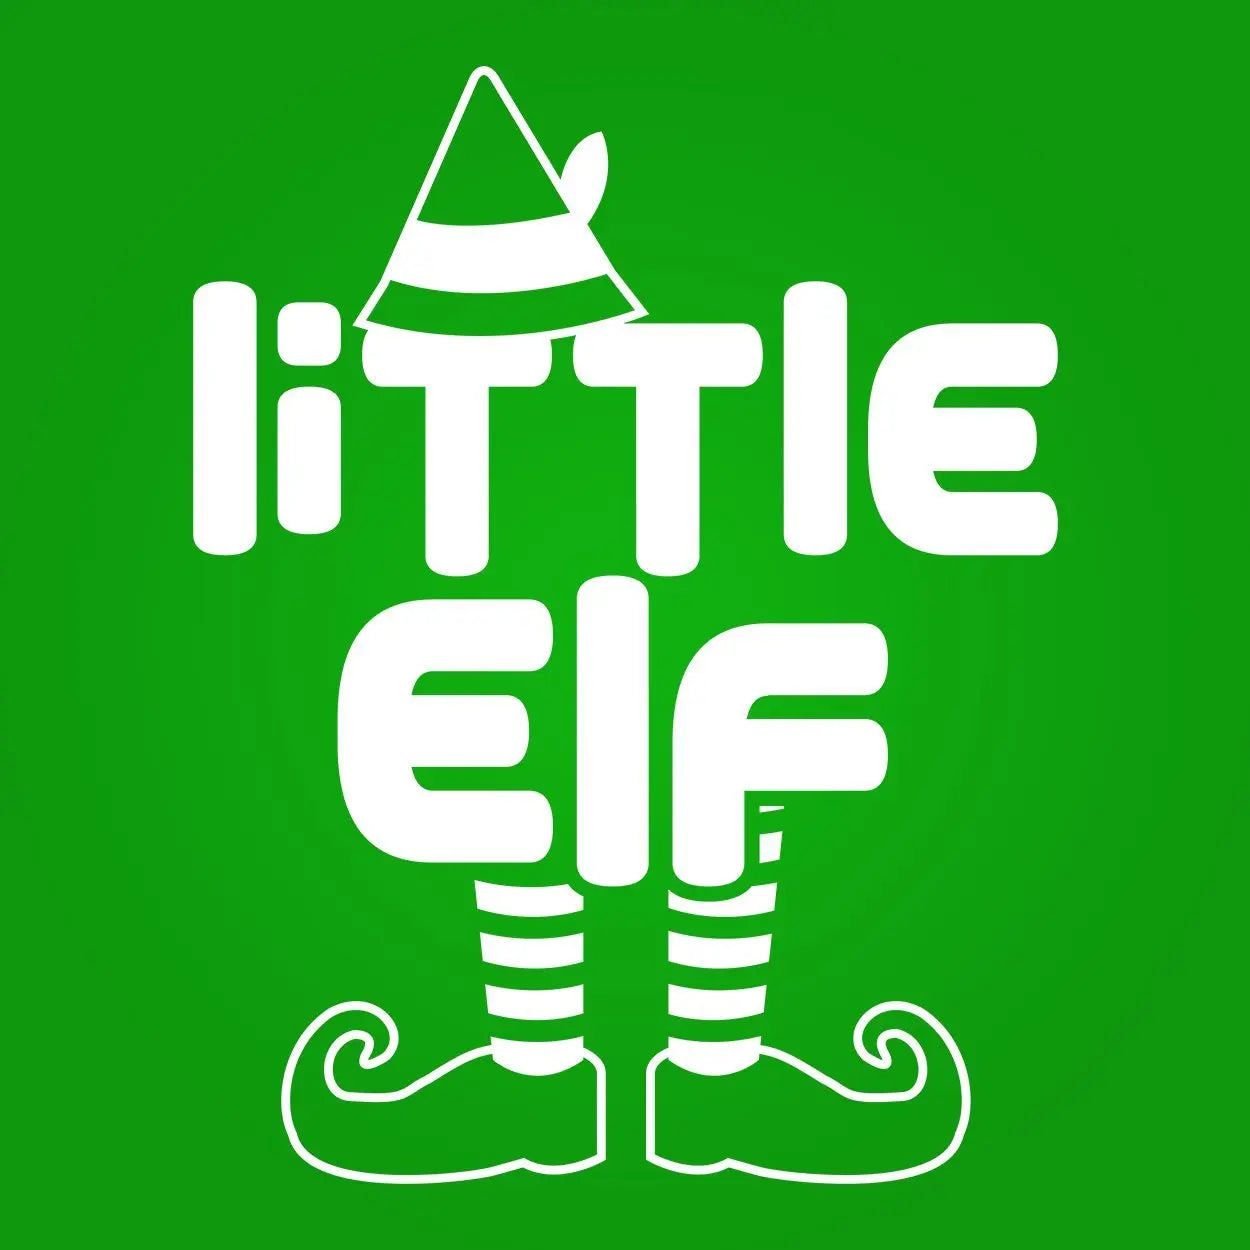 Little Elf Tshirt - Donkey Tees